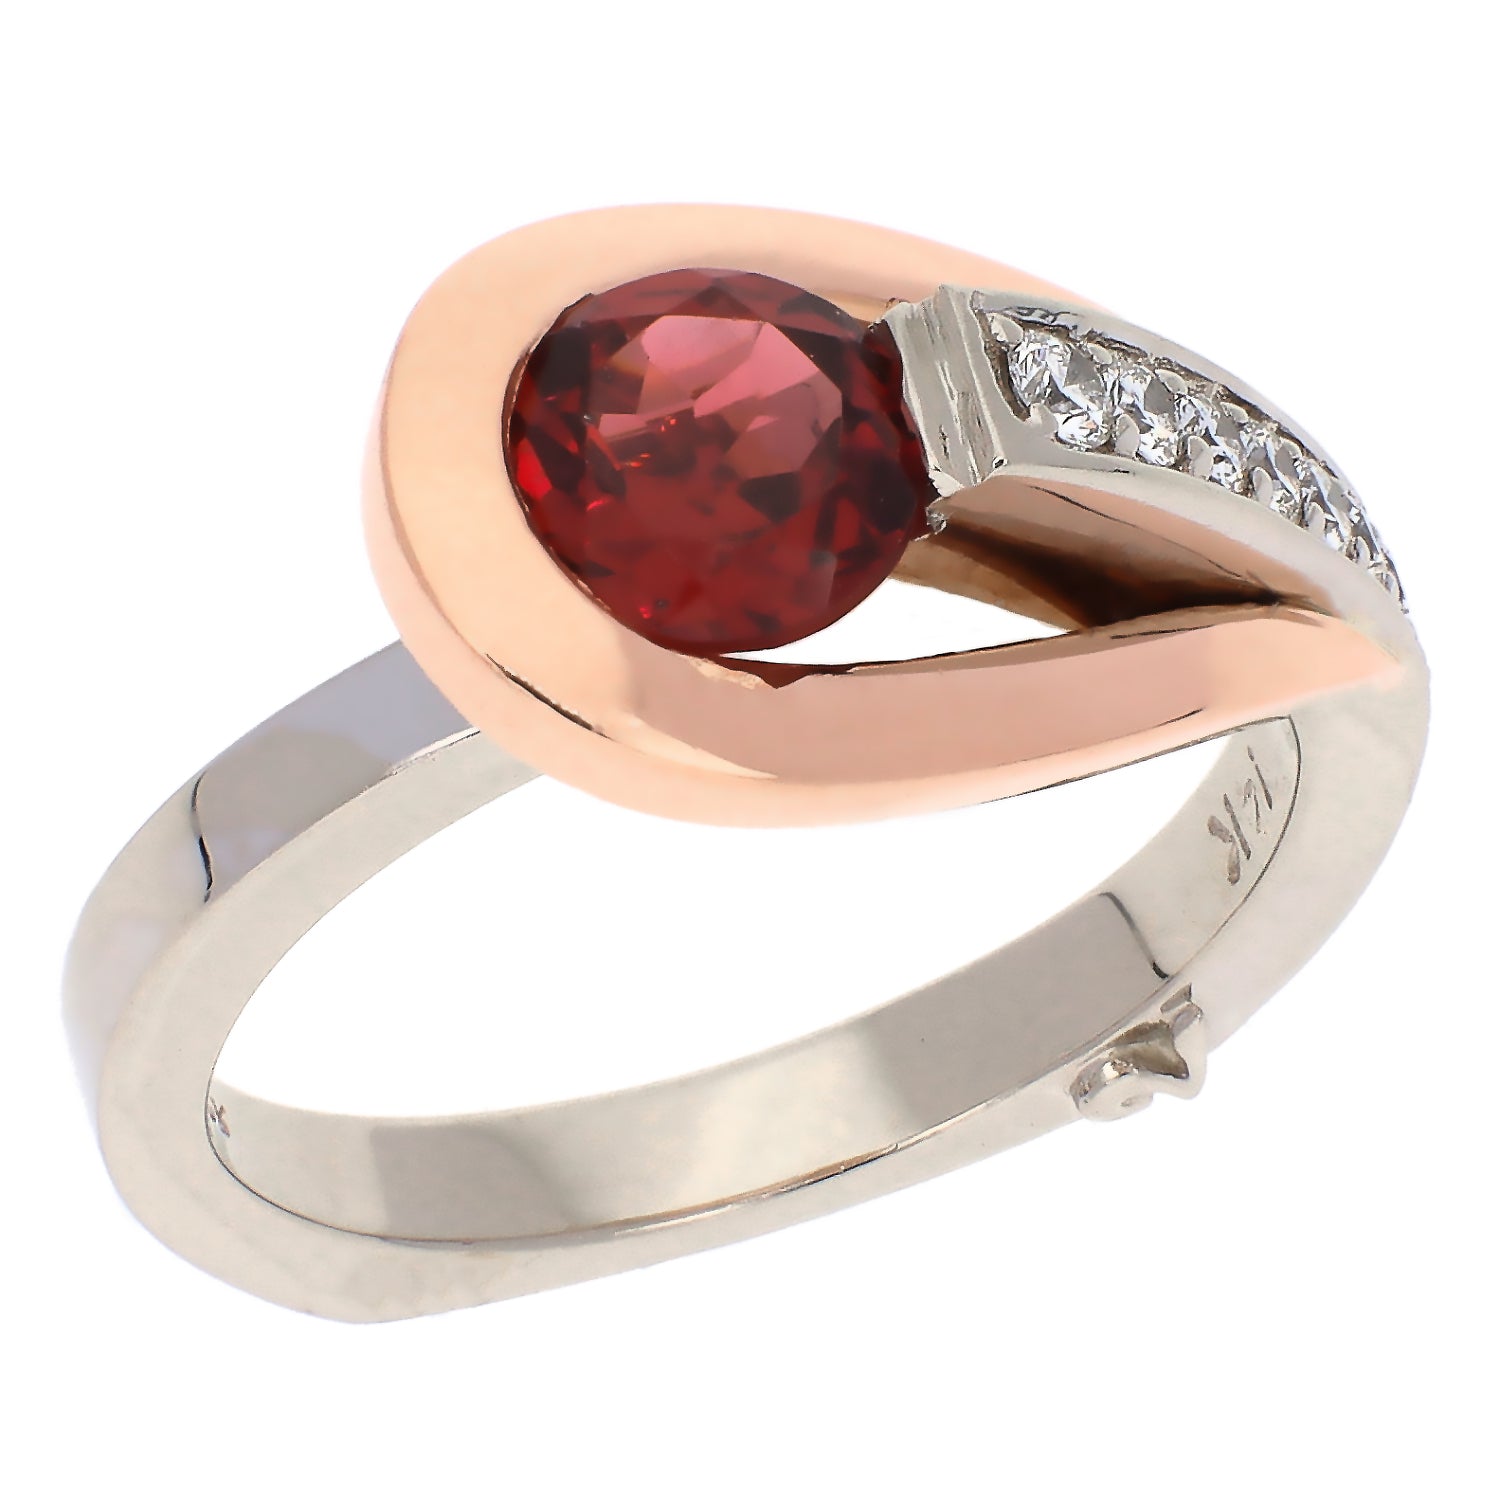 Ancora Design 14K White and Rose Gold Garnet and Diamond Ring